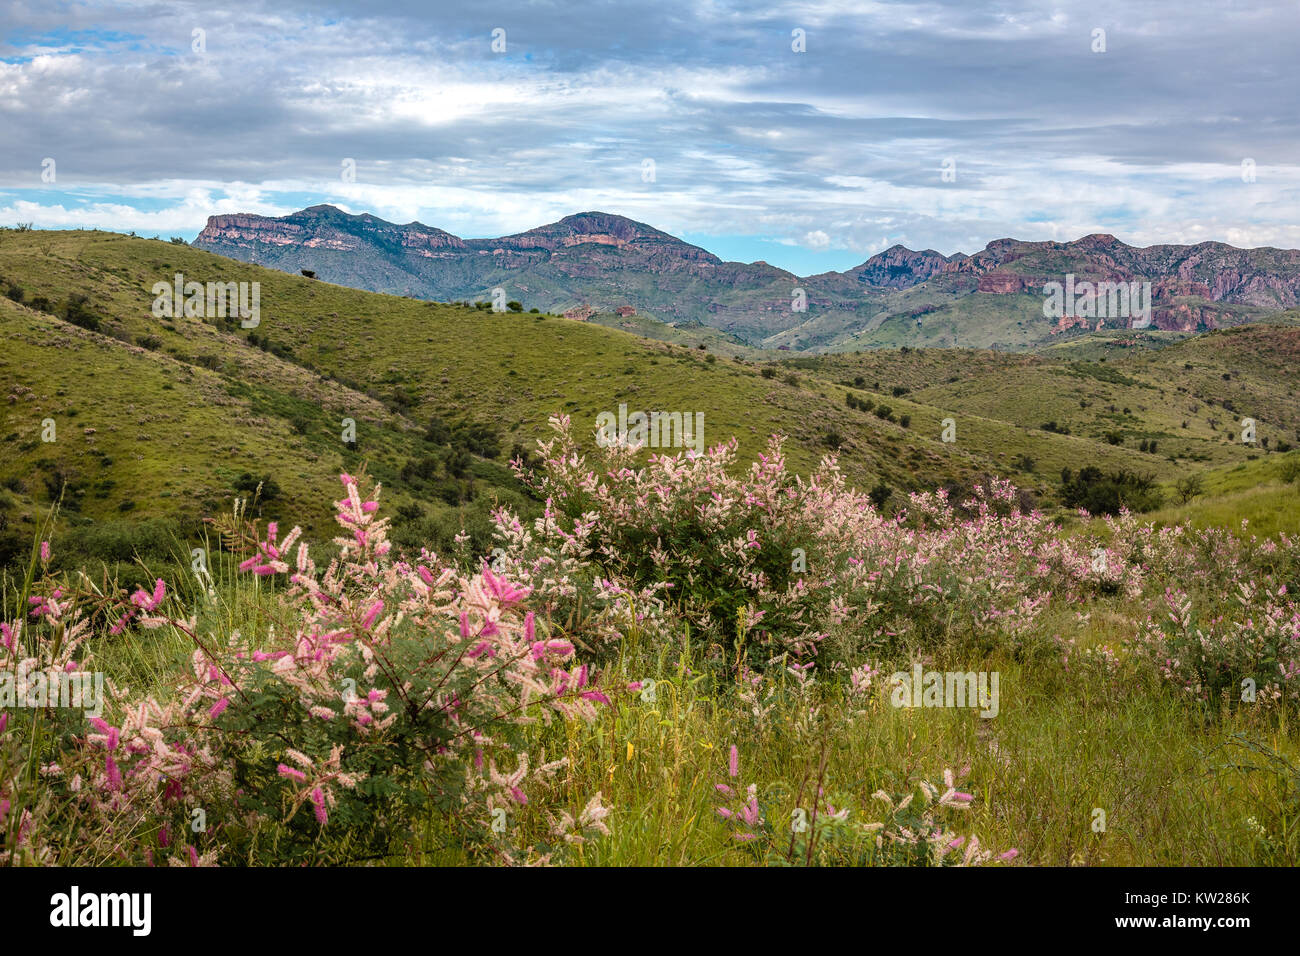 A bountiful Monsoon Season drape the Pajarito Mountains in grass and wildflowers. Tumacacori Highlands of southern Arizona. Stock Photo